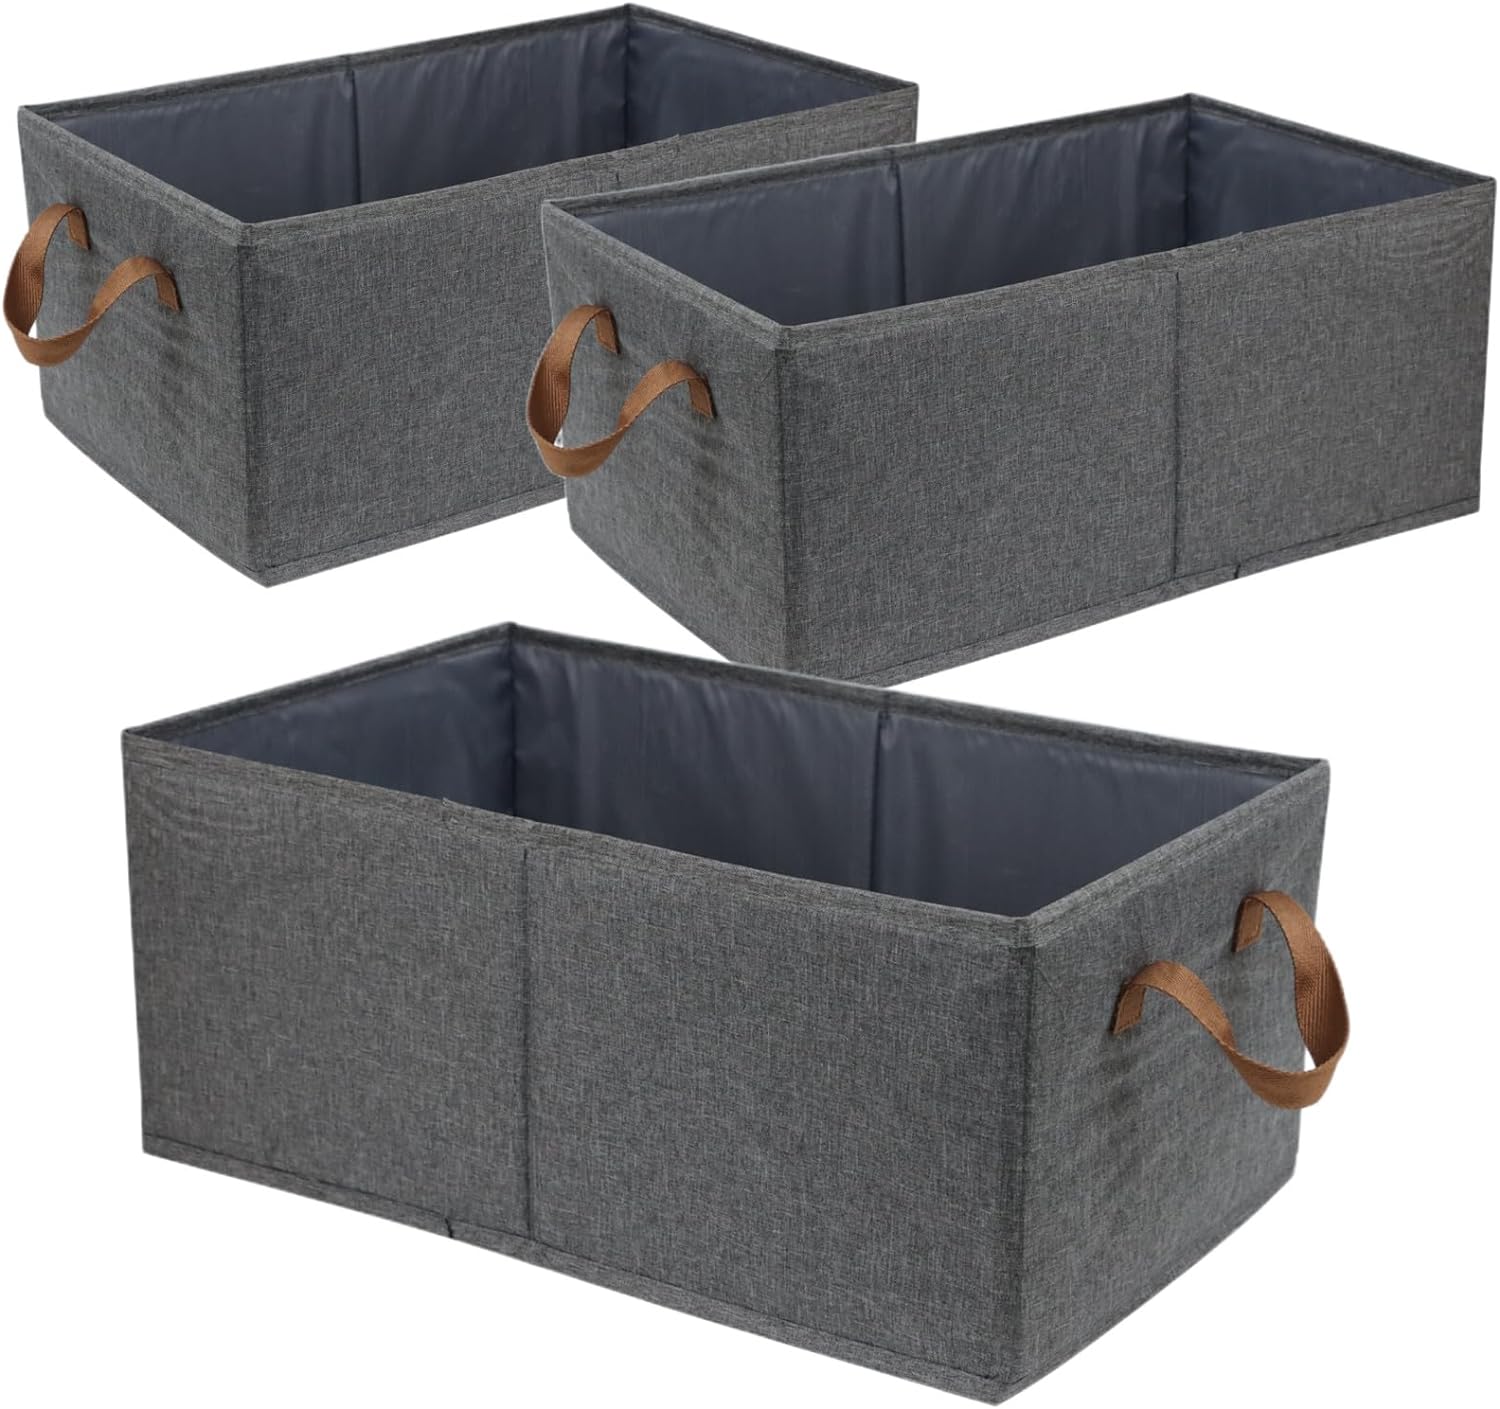 Pack of 3 Large Capacity Storage Bins Closet Organizer System, Sturdy Foldable Storage Boxes for Organizing Clothing, Sheets, Toys, Books - Shelf Organizer Shelves Basket Storage Bin